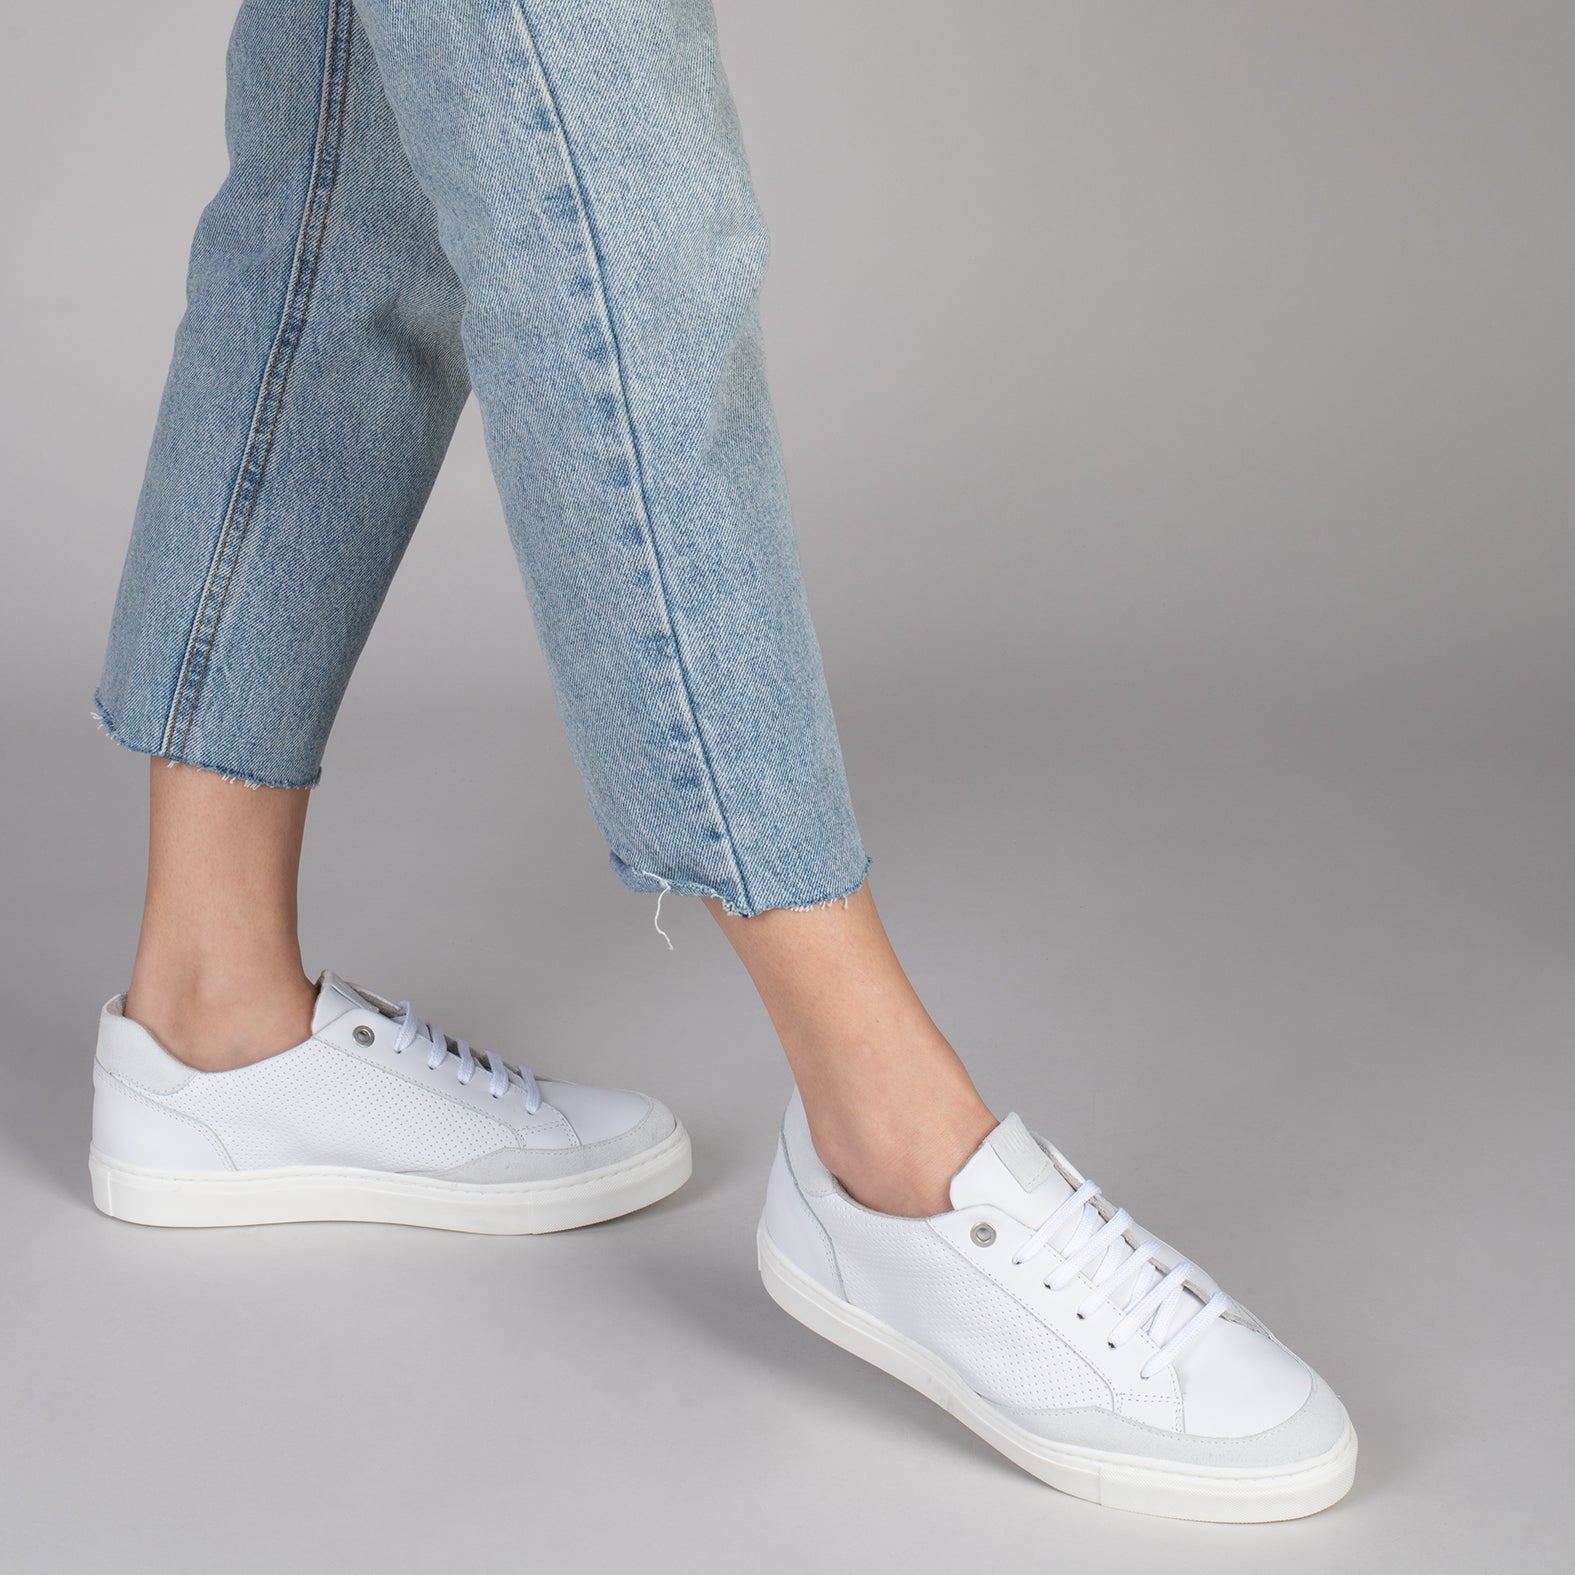 SNEAKER DOTS – WHITE casual sneaker